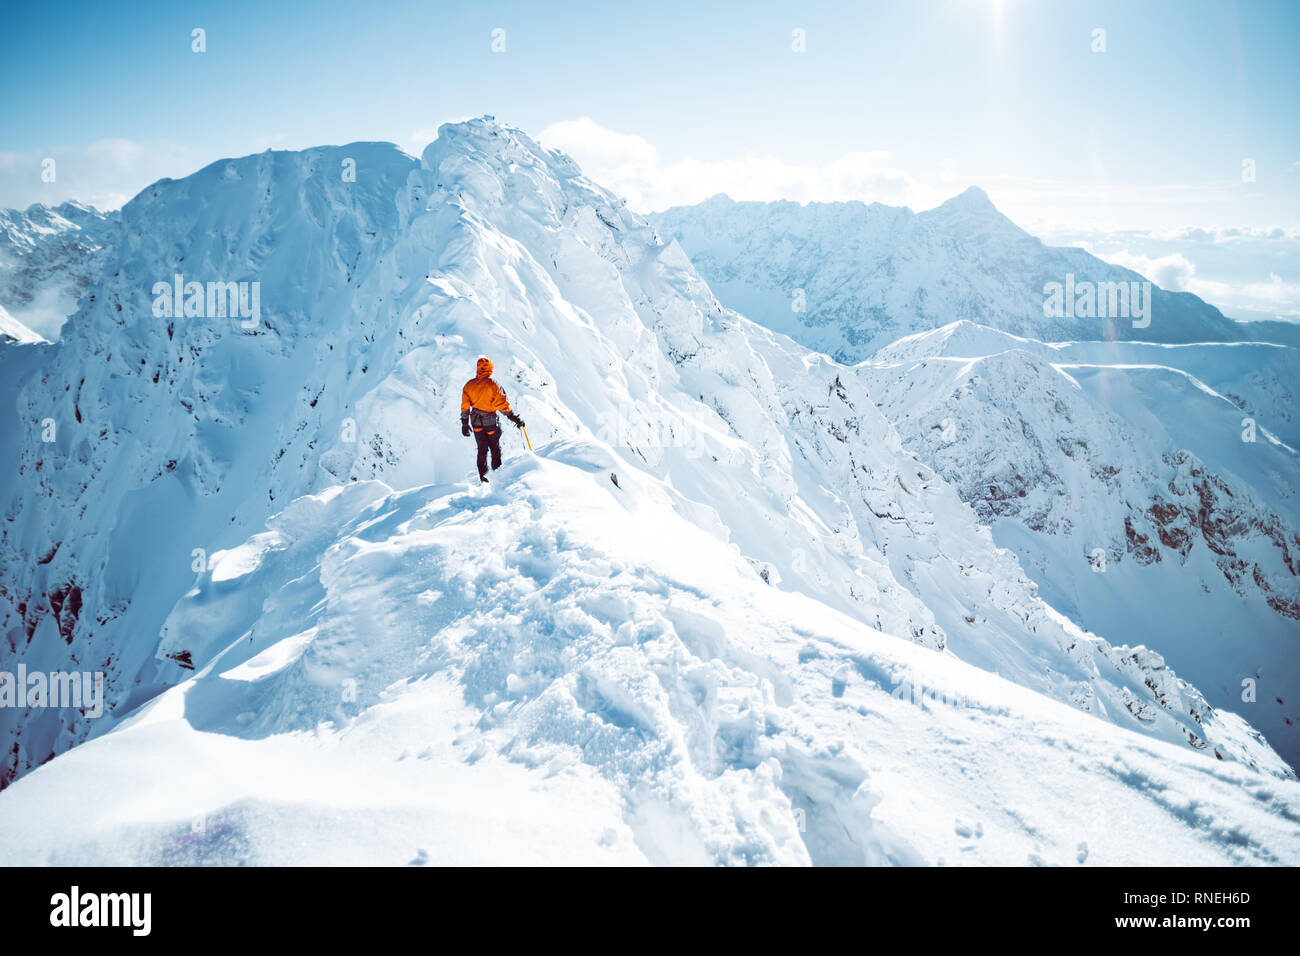 A climber ascending a mountain in winter Stock Photo